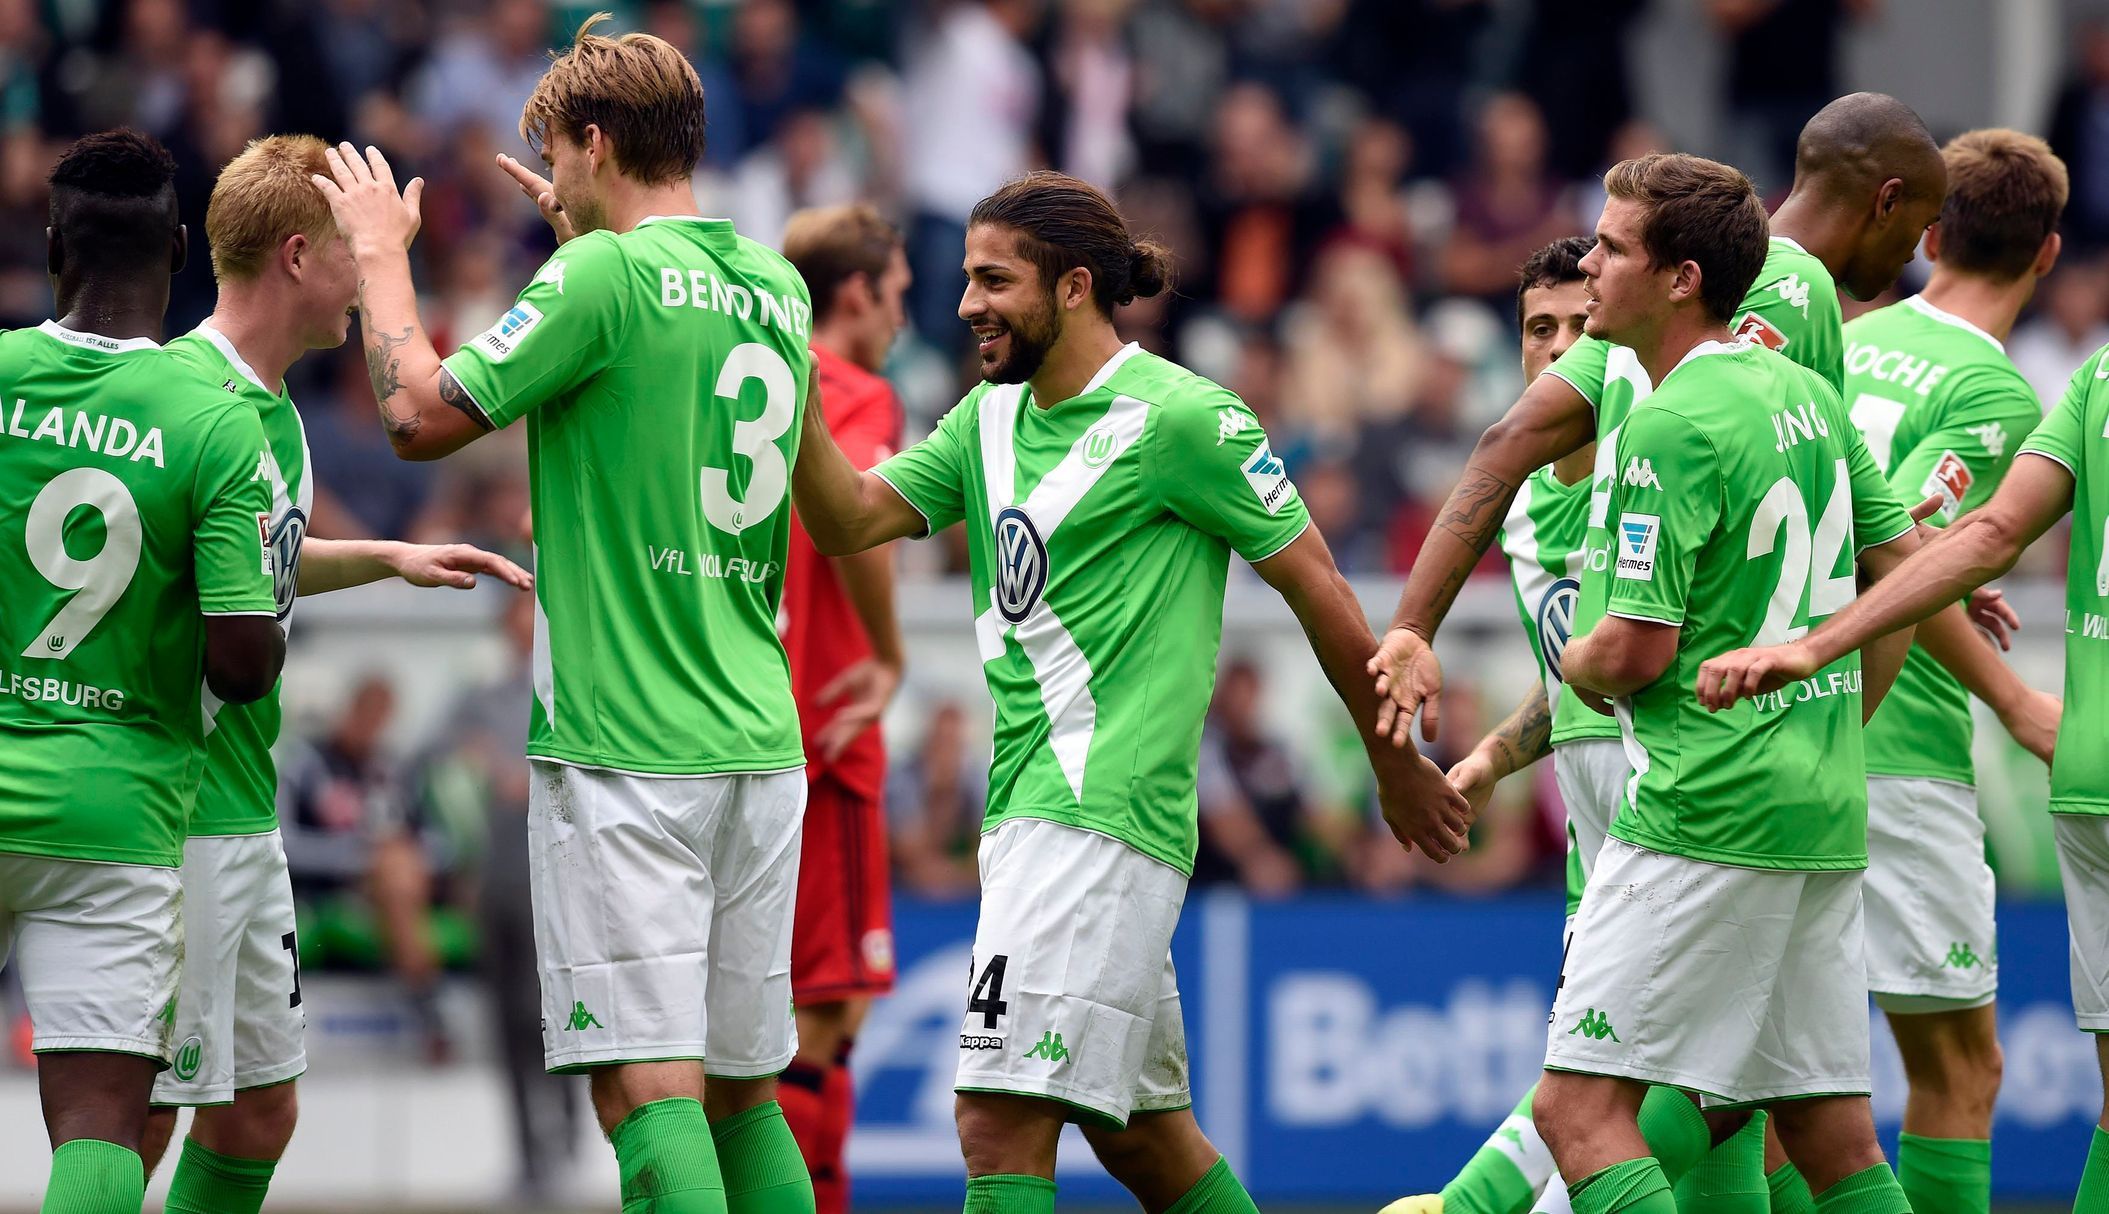 VfL Wolfburg's Ricardo Rodriguez celebrates with teammates after scoring against Bayer Leverkusen during the German Bundesliga first division soccer match in Wolfsbur